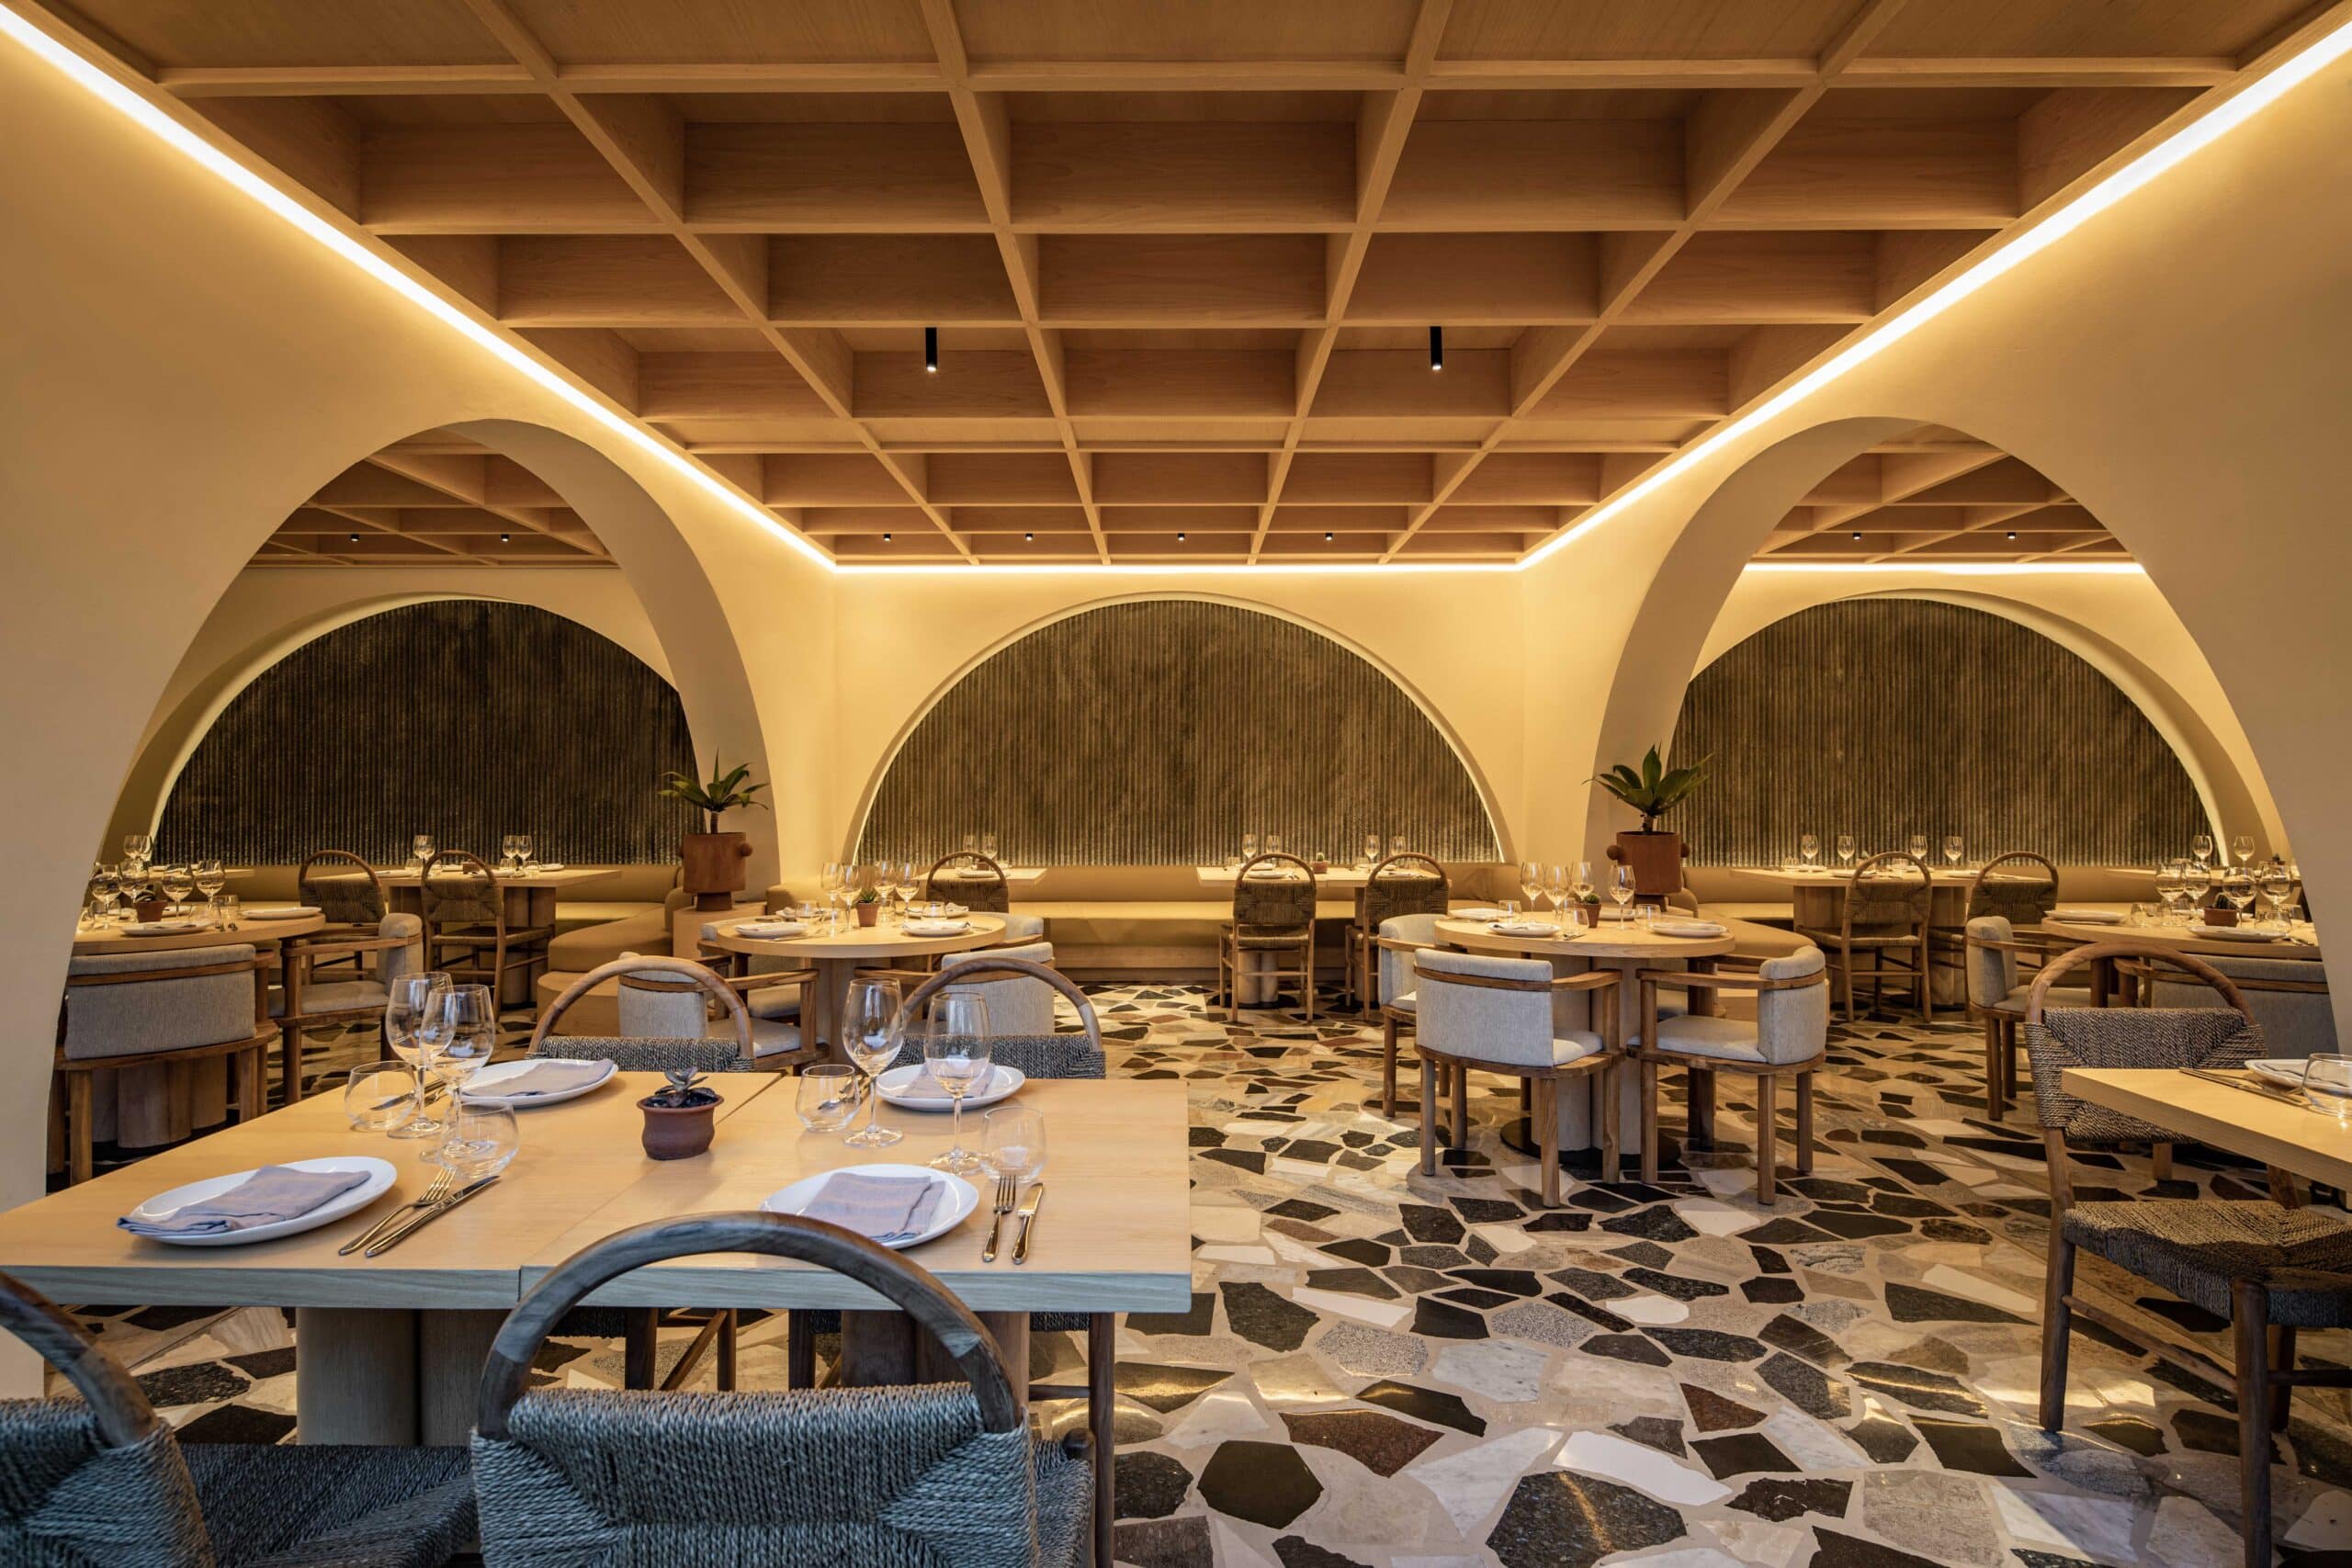 Restaurant Design - Luma Bali - Interior Design - Architecture - Architect Bali - Dining Room